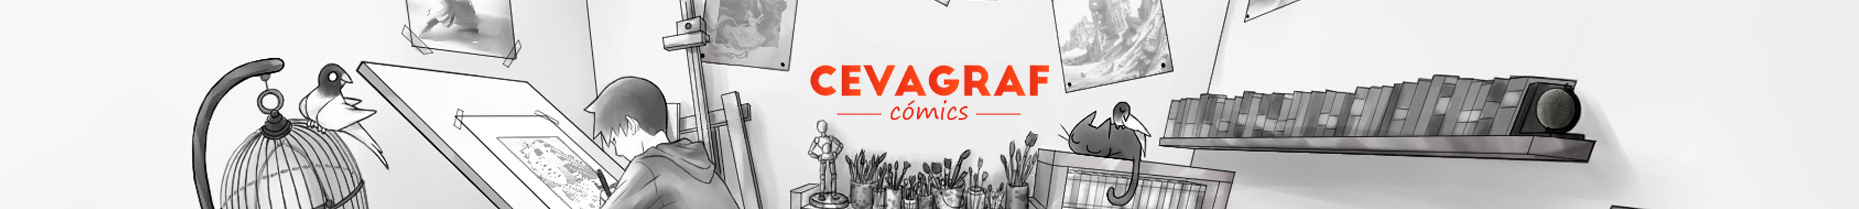 Cevagraf Cómics's profile banner